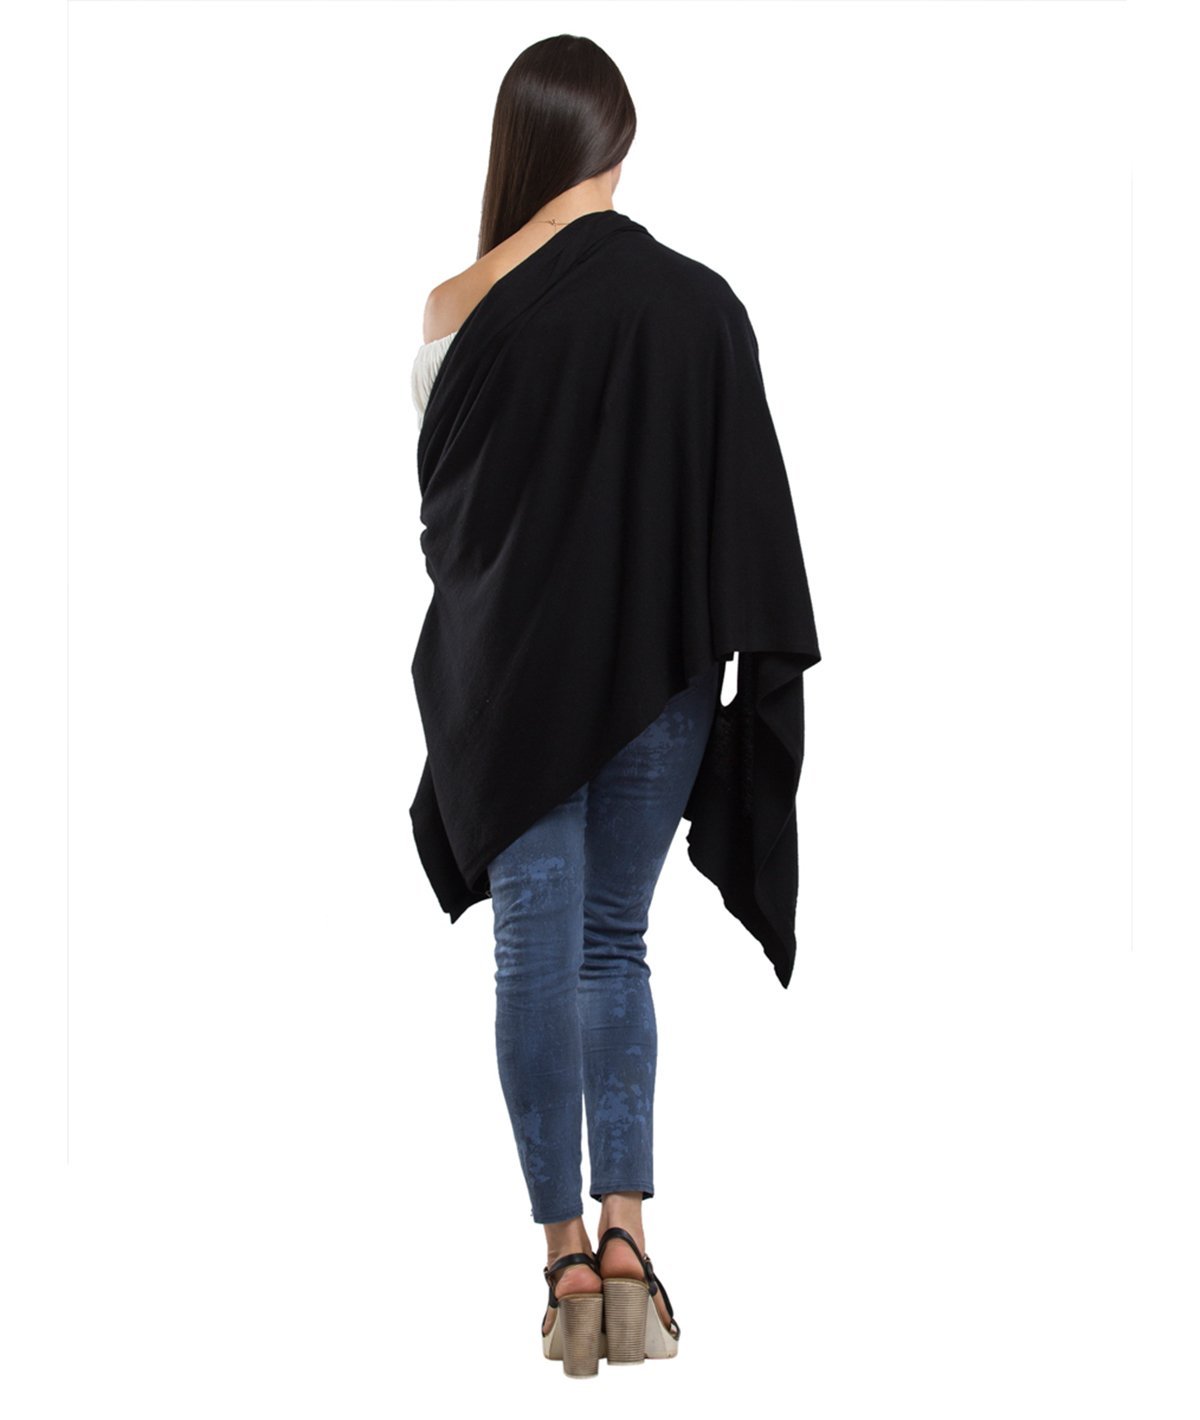 Palma - Black Cotton Knitted Fashion Poncho / Top / Cape